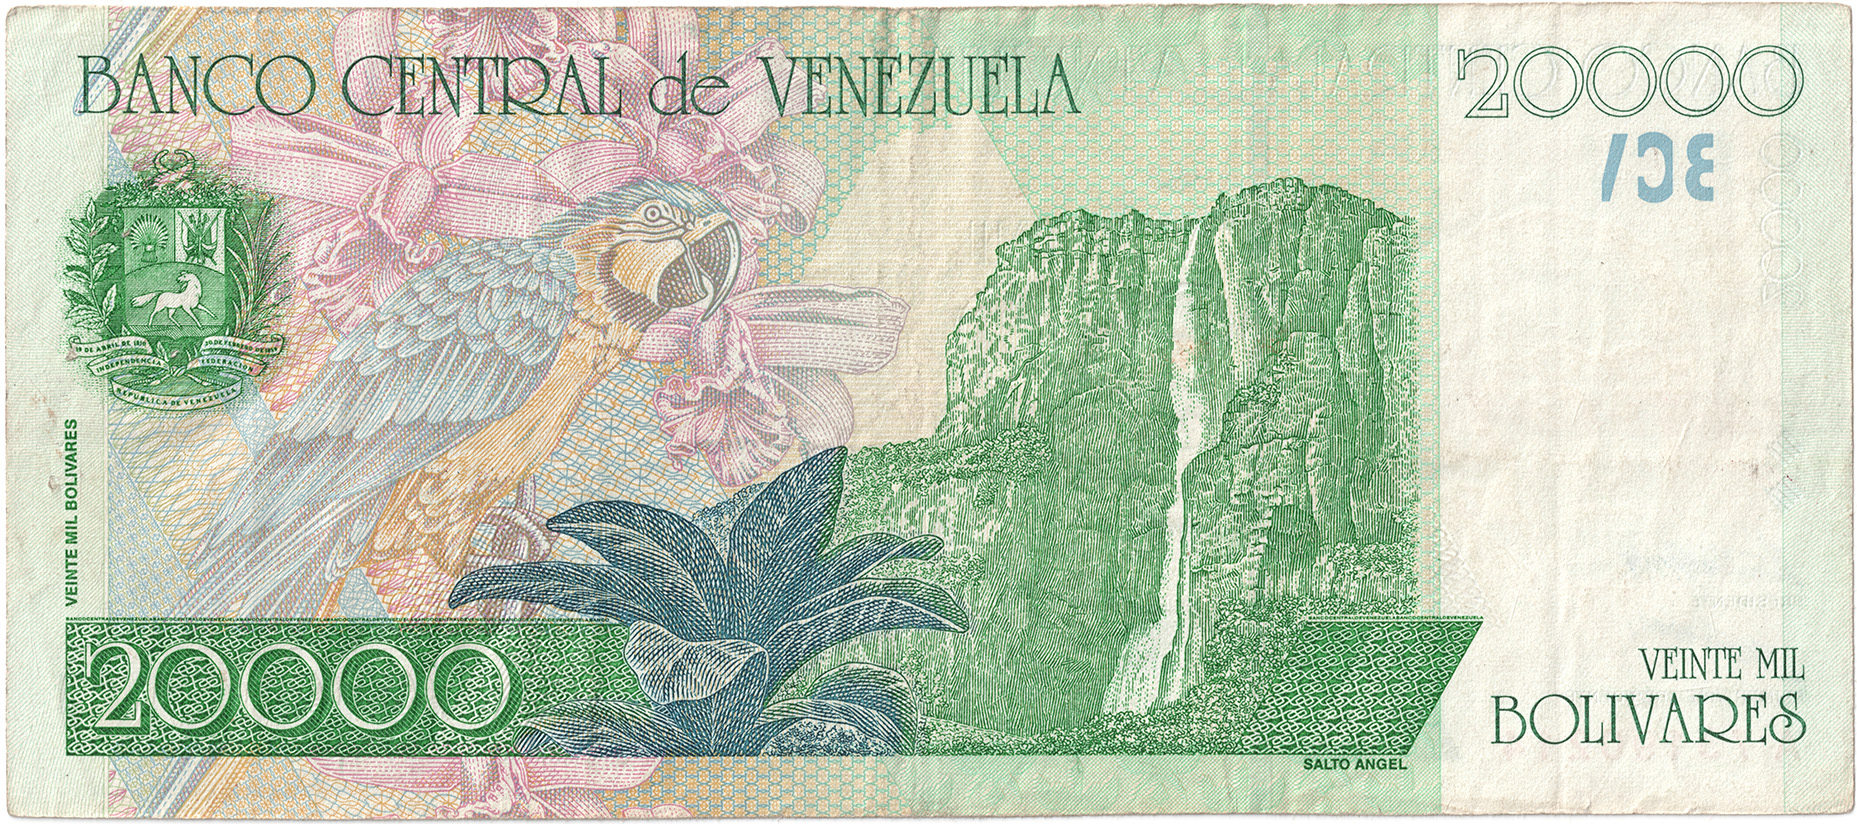 Venezuela_20000-Bolívares-1998_A73190214_rev01a.jpg